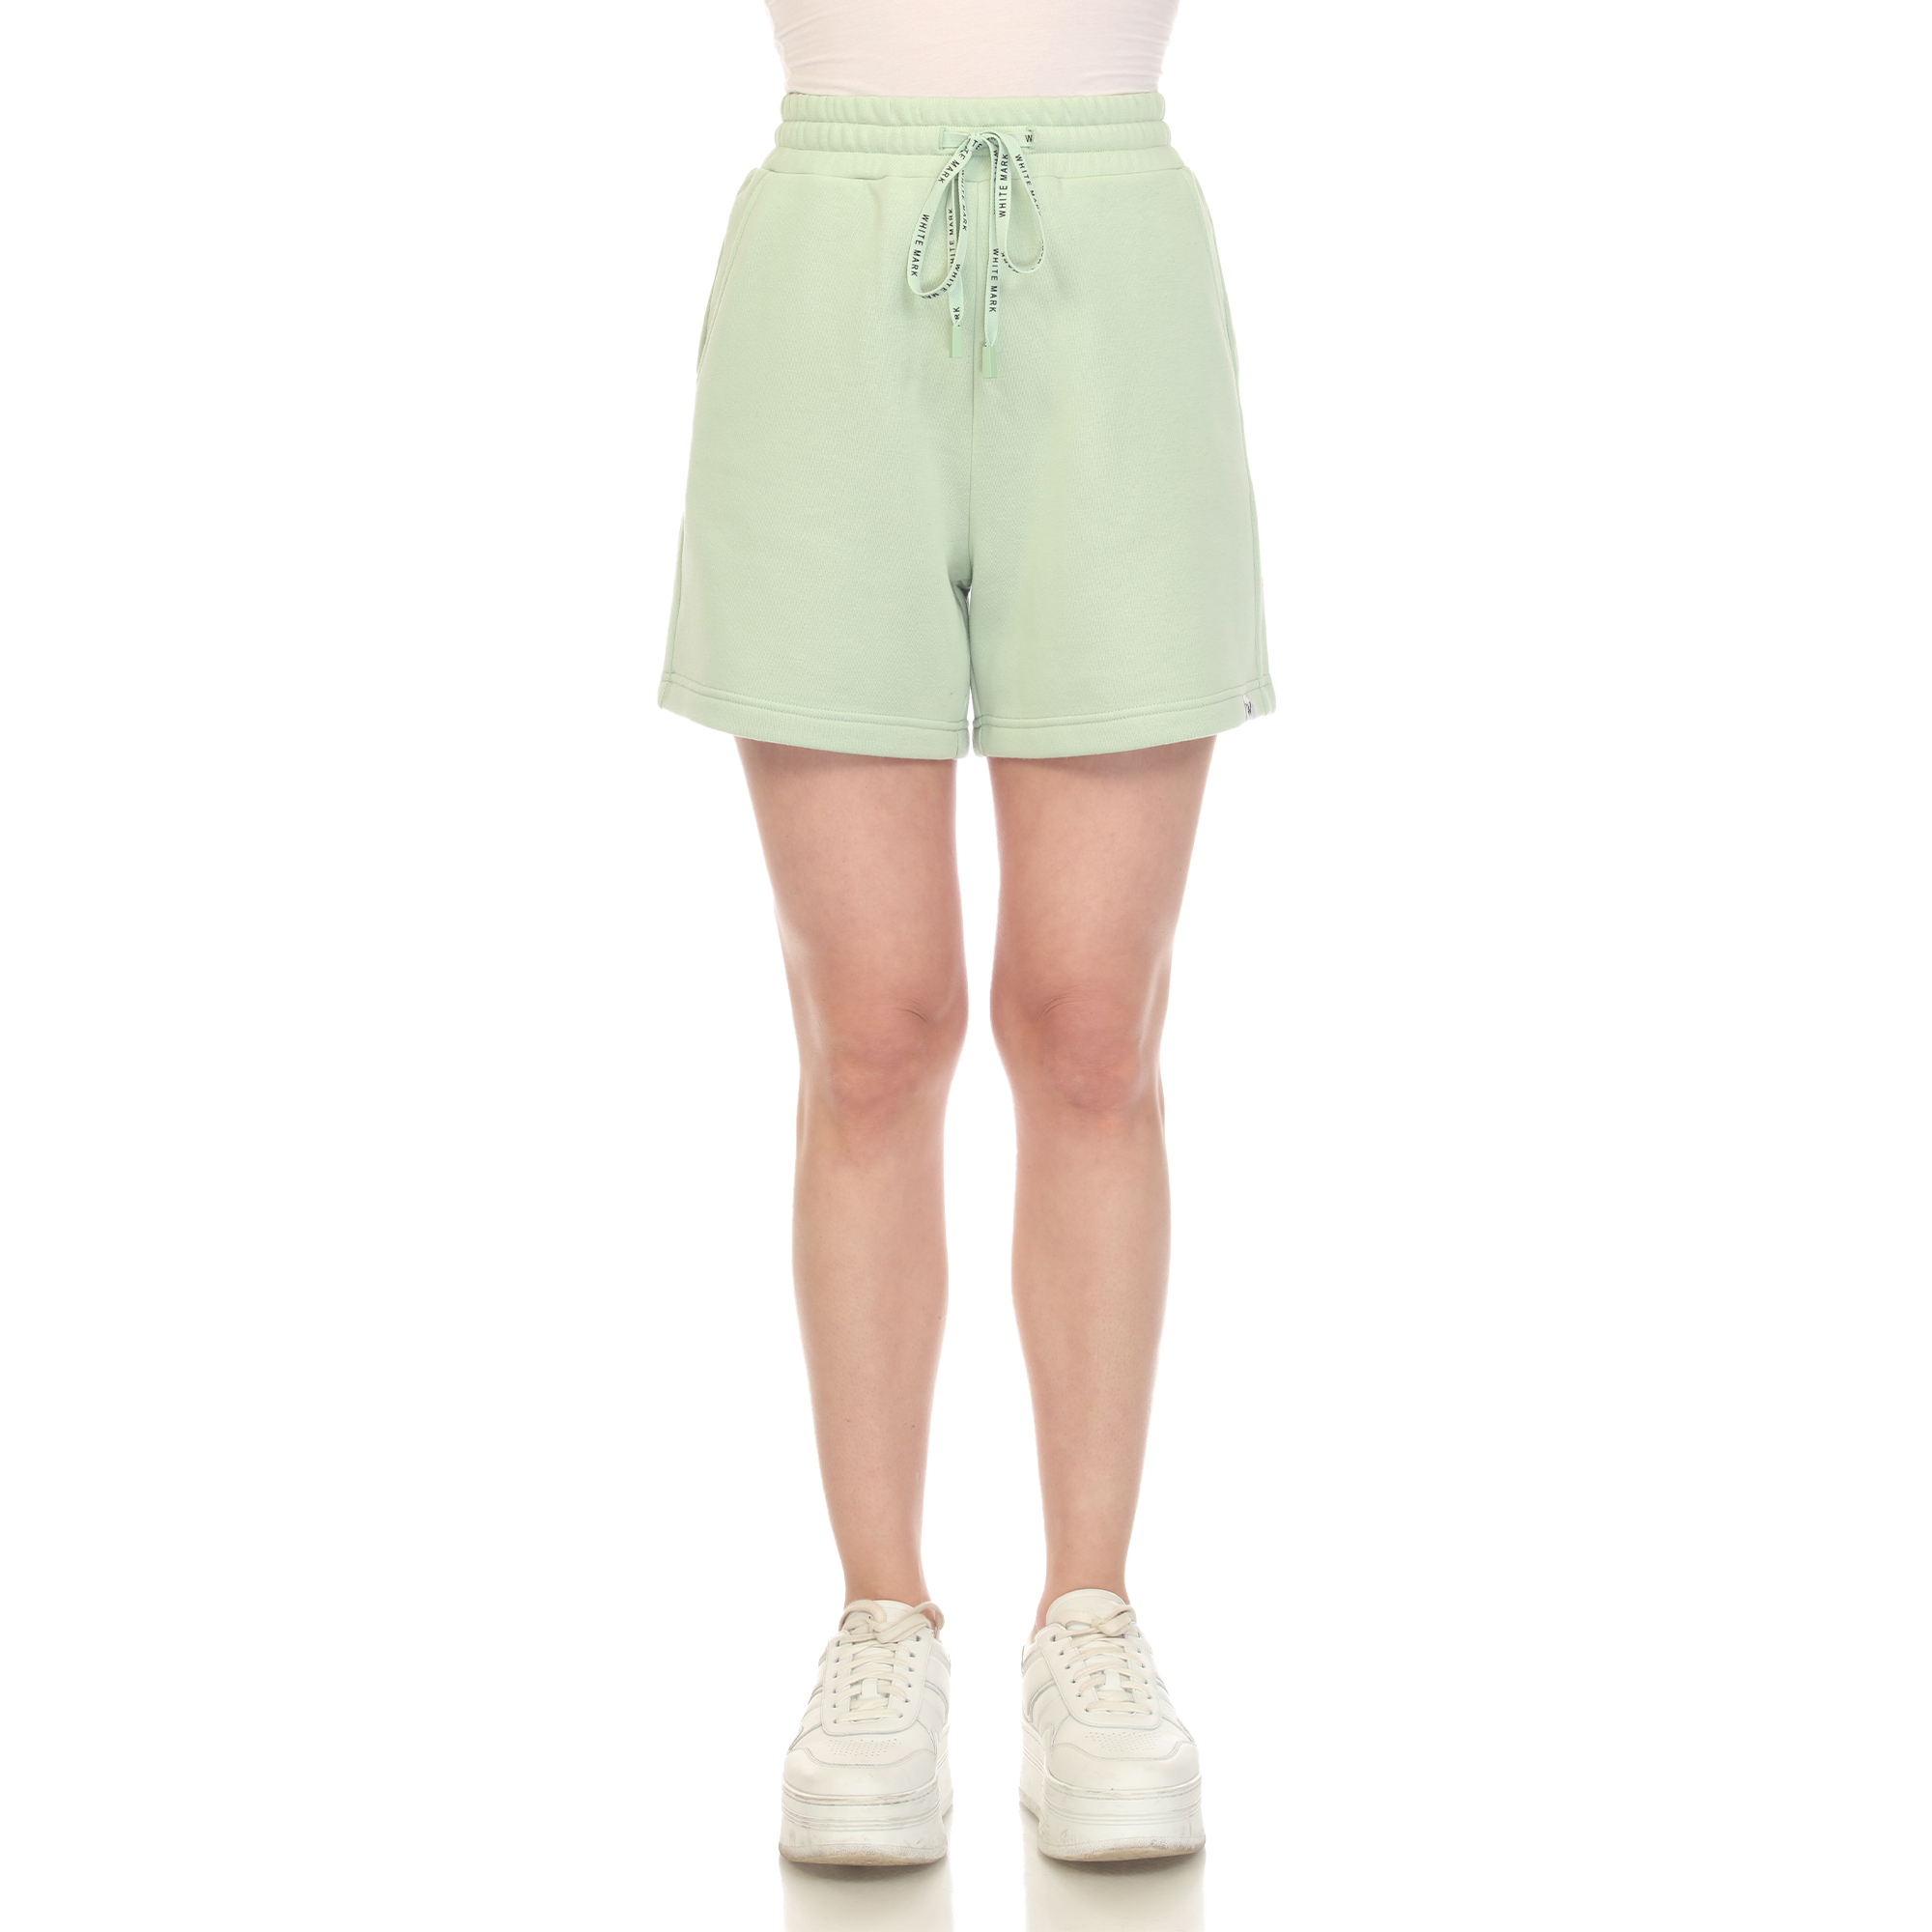 White Mark Women's Super Soft Drawstring Waistband Sweat Shorts - Sage, Small